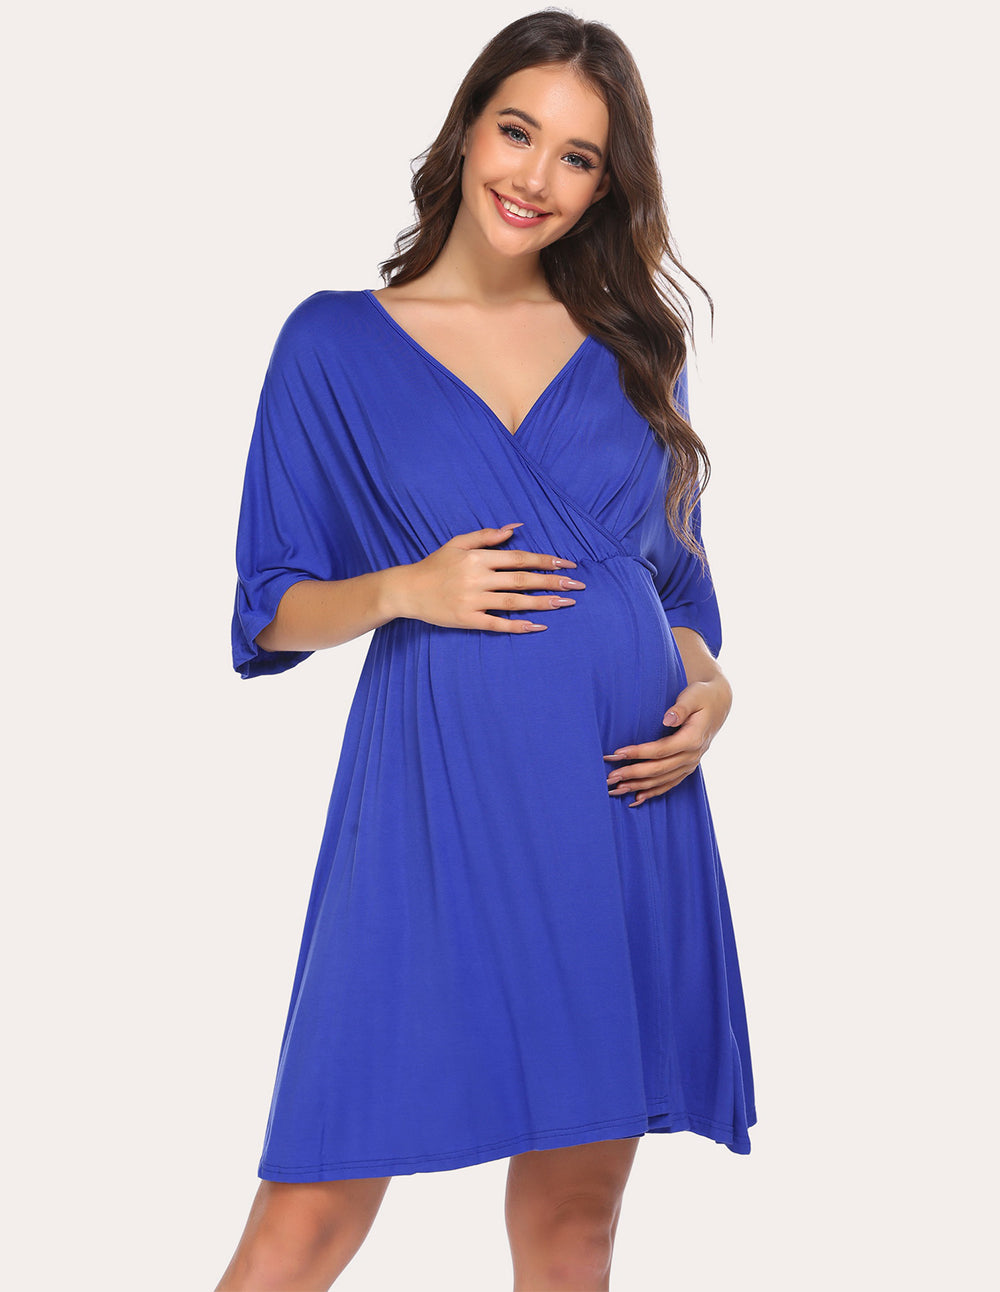 Ekouaer Nursing Gown 3 in 1 Delivery/Labor/Nursing Nightgown Women  Maternity Hospital Gown Zipper Breastfeeding Sleepwear, A_navy Blue, M  price in UAE,  UAE